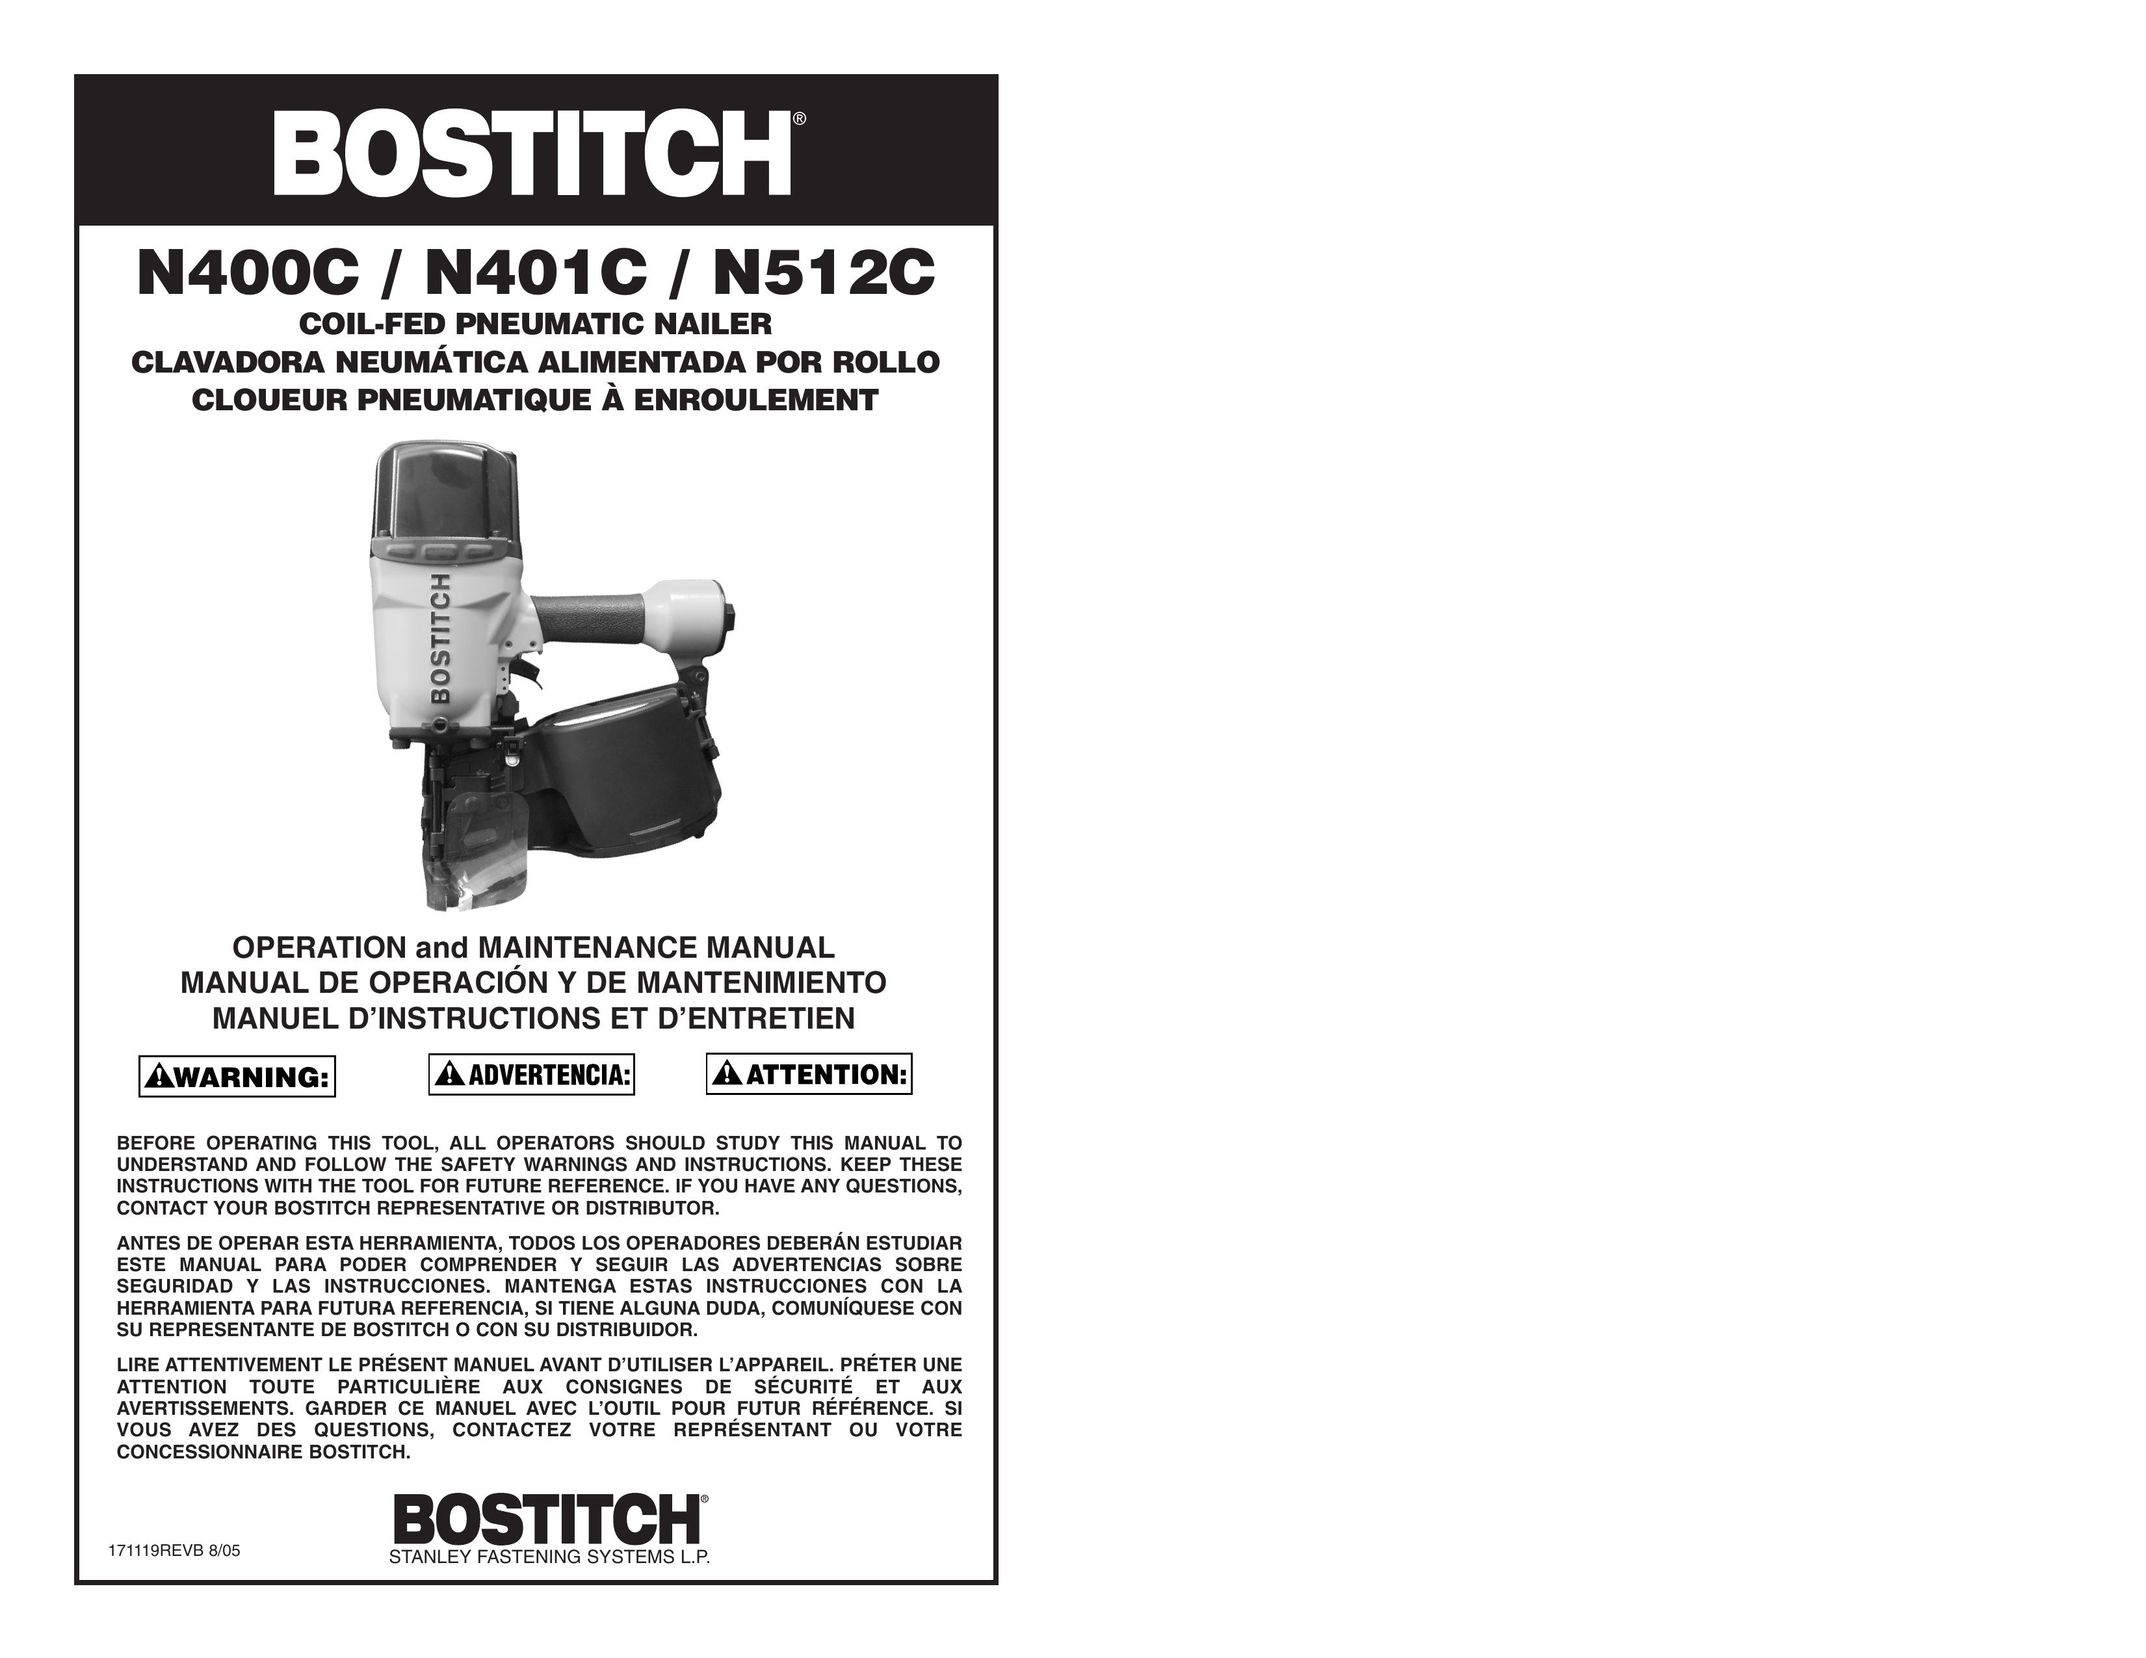 Bostitch N512C Nail Gun User Manual